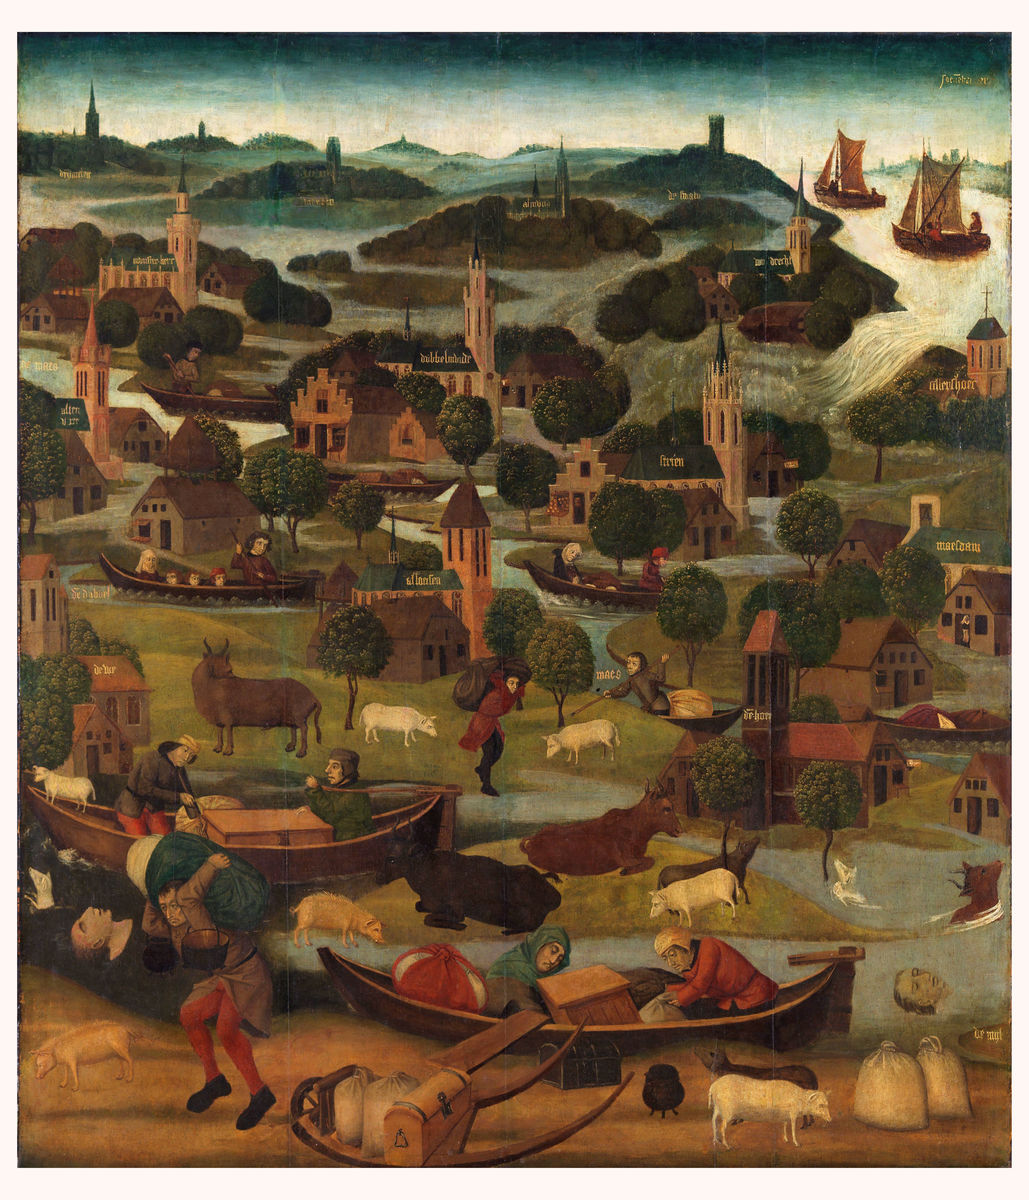 The Saint Elizabeth’s Day Flood - c. 1490 - c. 1495